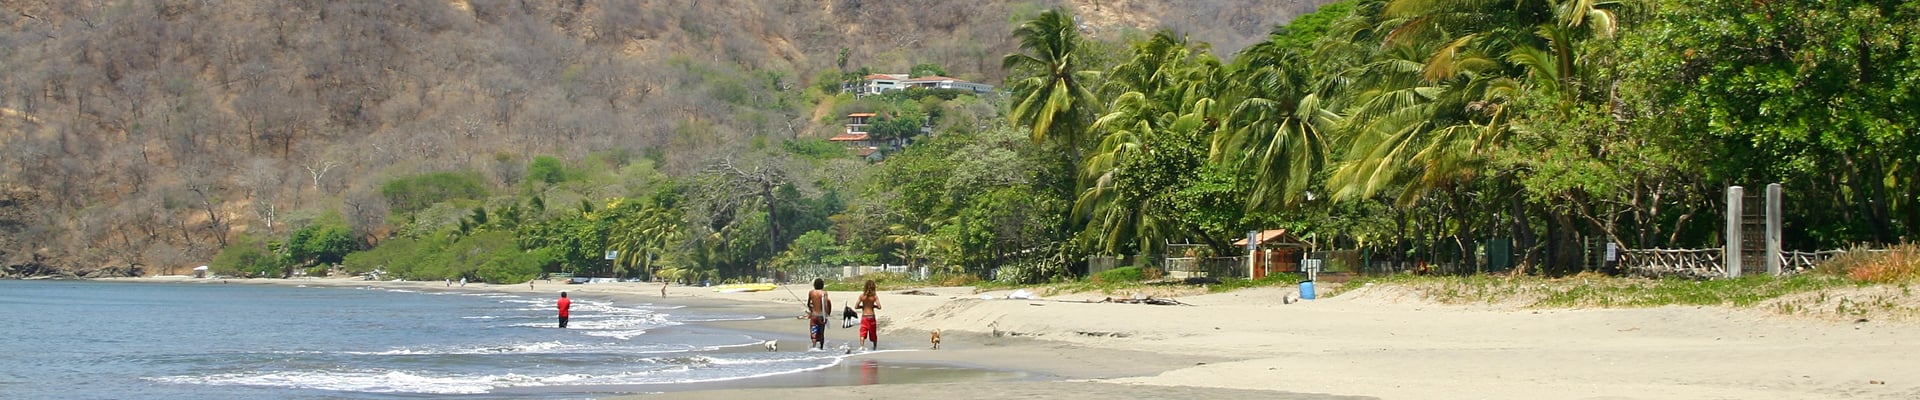 Playa Hermosa, Costa Rica